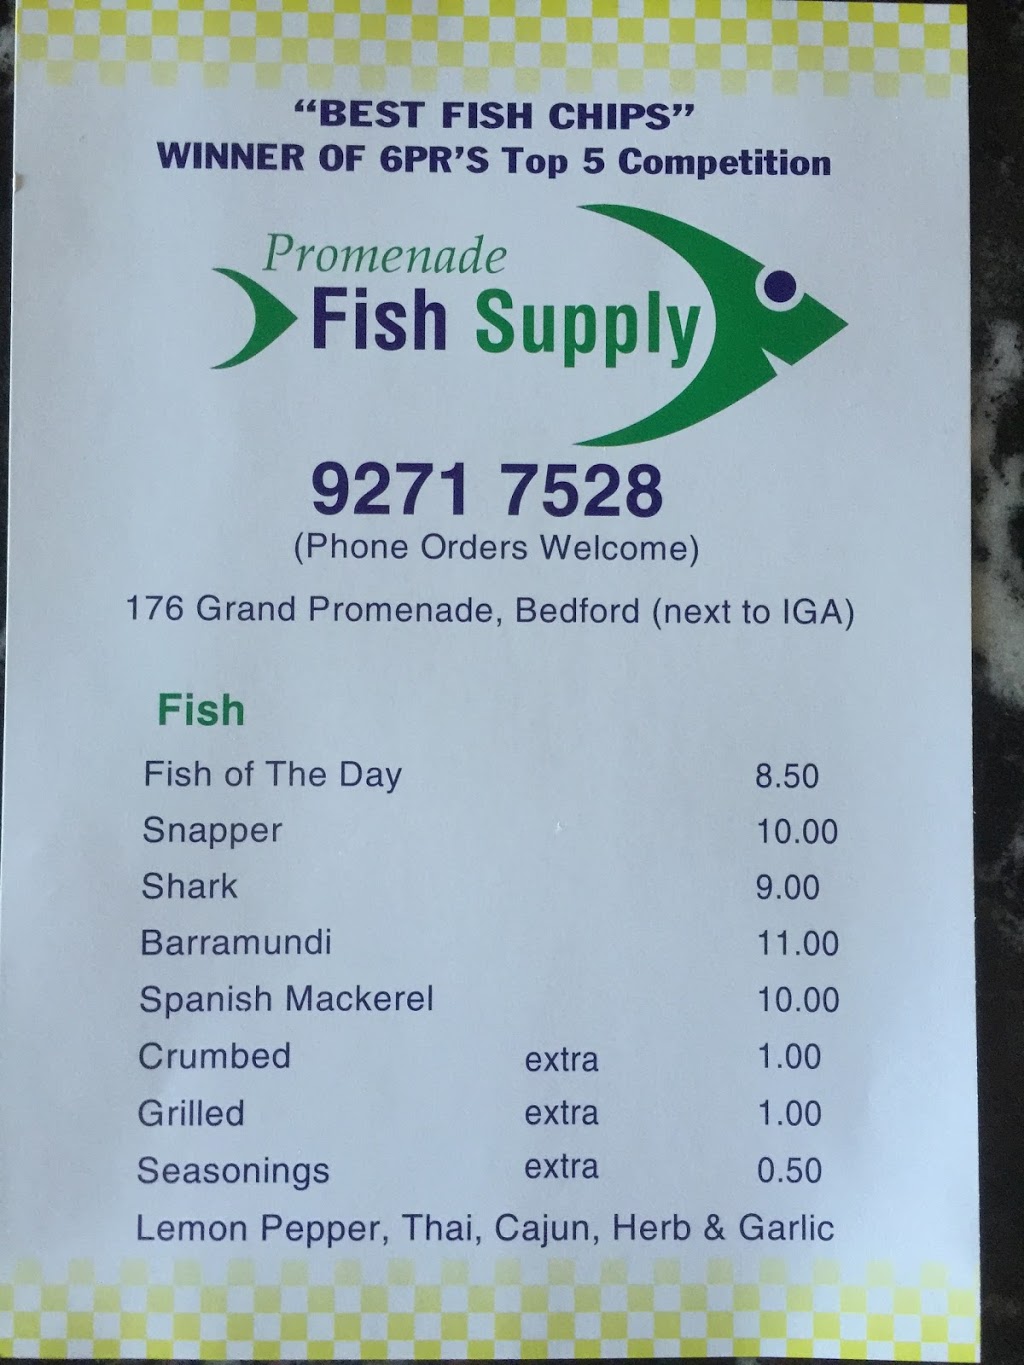 Promenade Fish and chips | 176 Grand Promenade, Bedford WA 6052, Australia | Phone: (08) 9271 7528